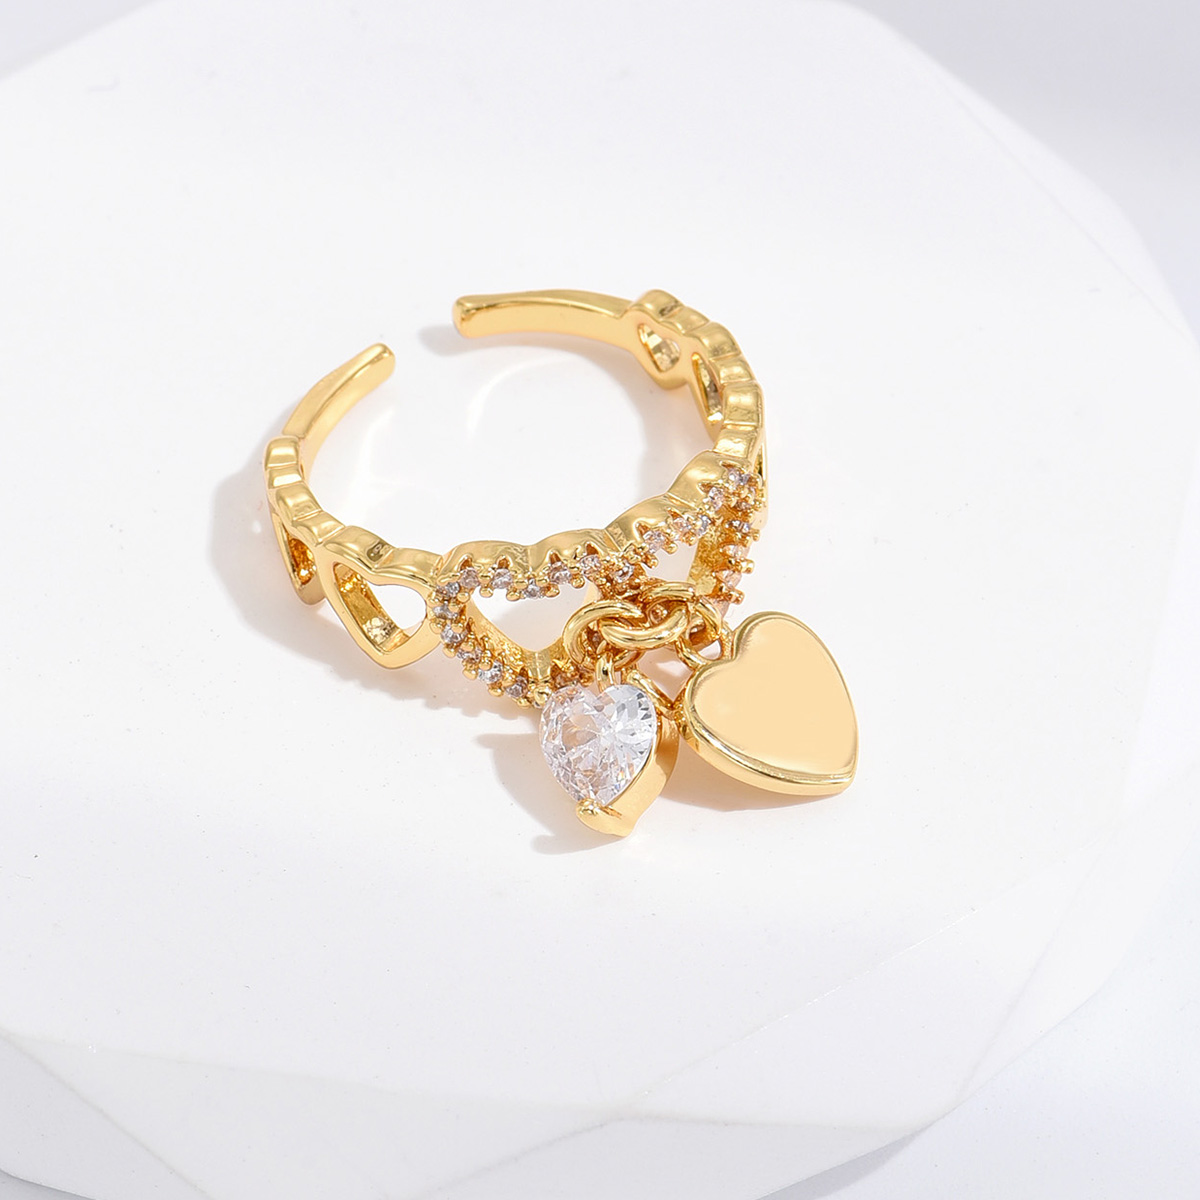 10 pcs - Love Heart Charm Zircon Crystal Band Open Ring Adjustable in Gold|GCJ383 |UK SELLER